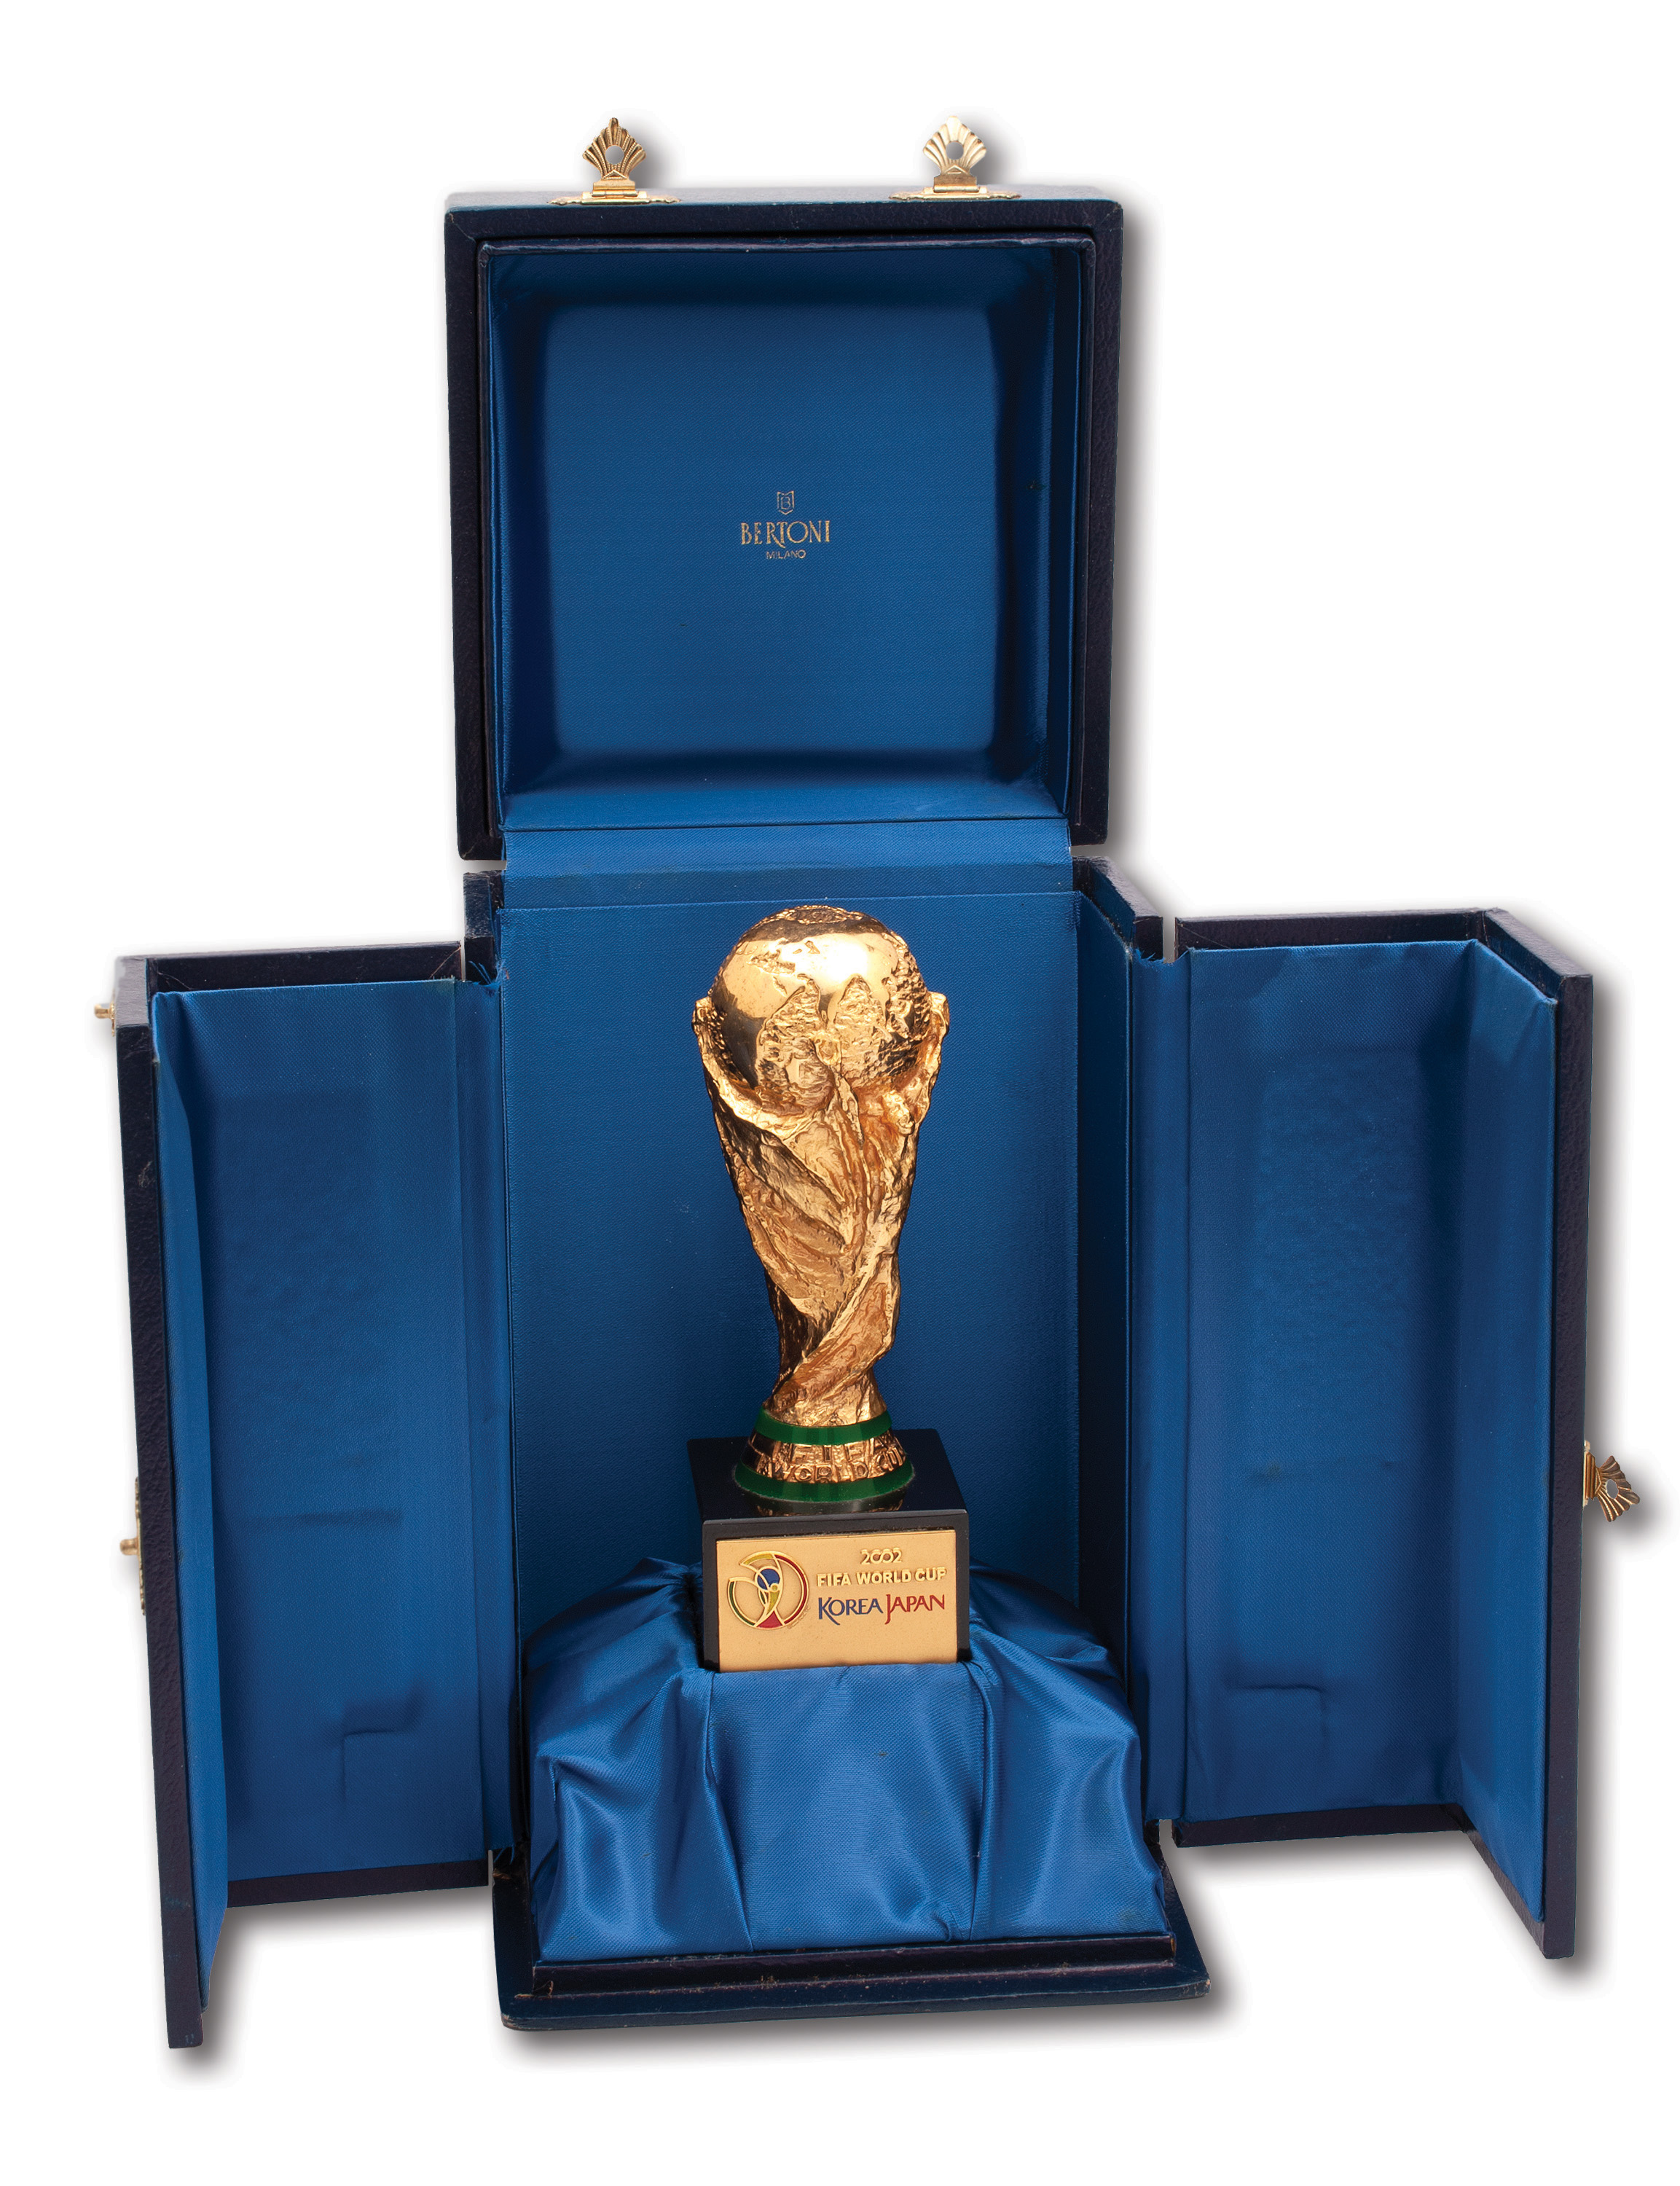 Lot Detail - 2002 FIFA WORLD CUP WINNER'S BERTONI TROPHY AWARDED